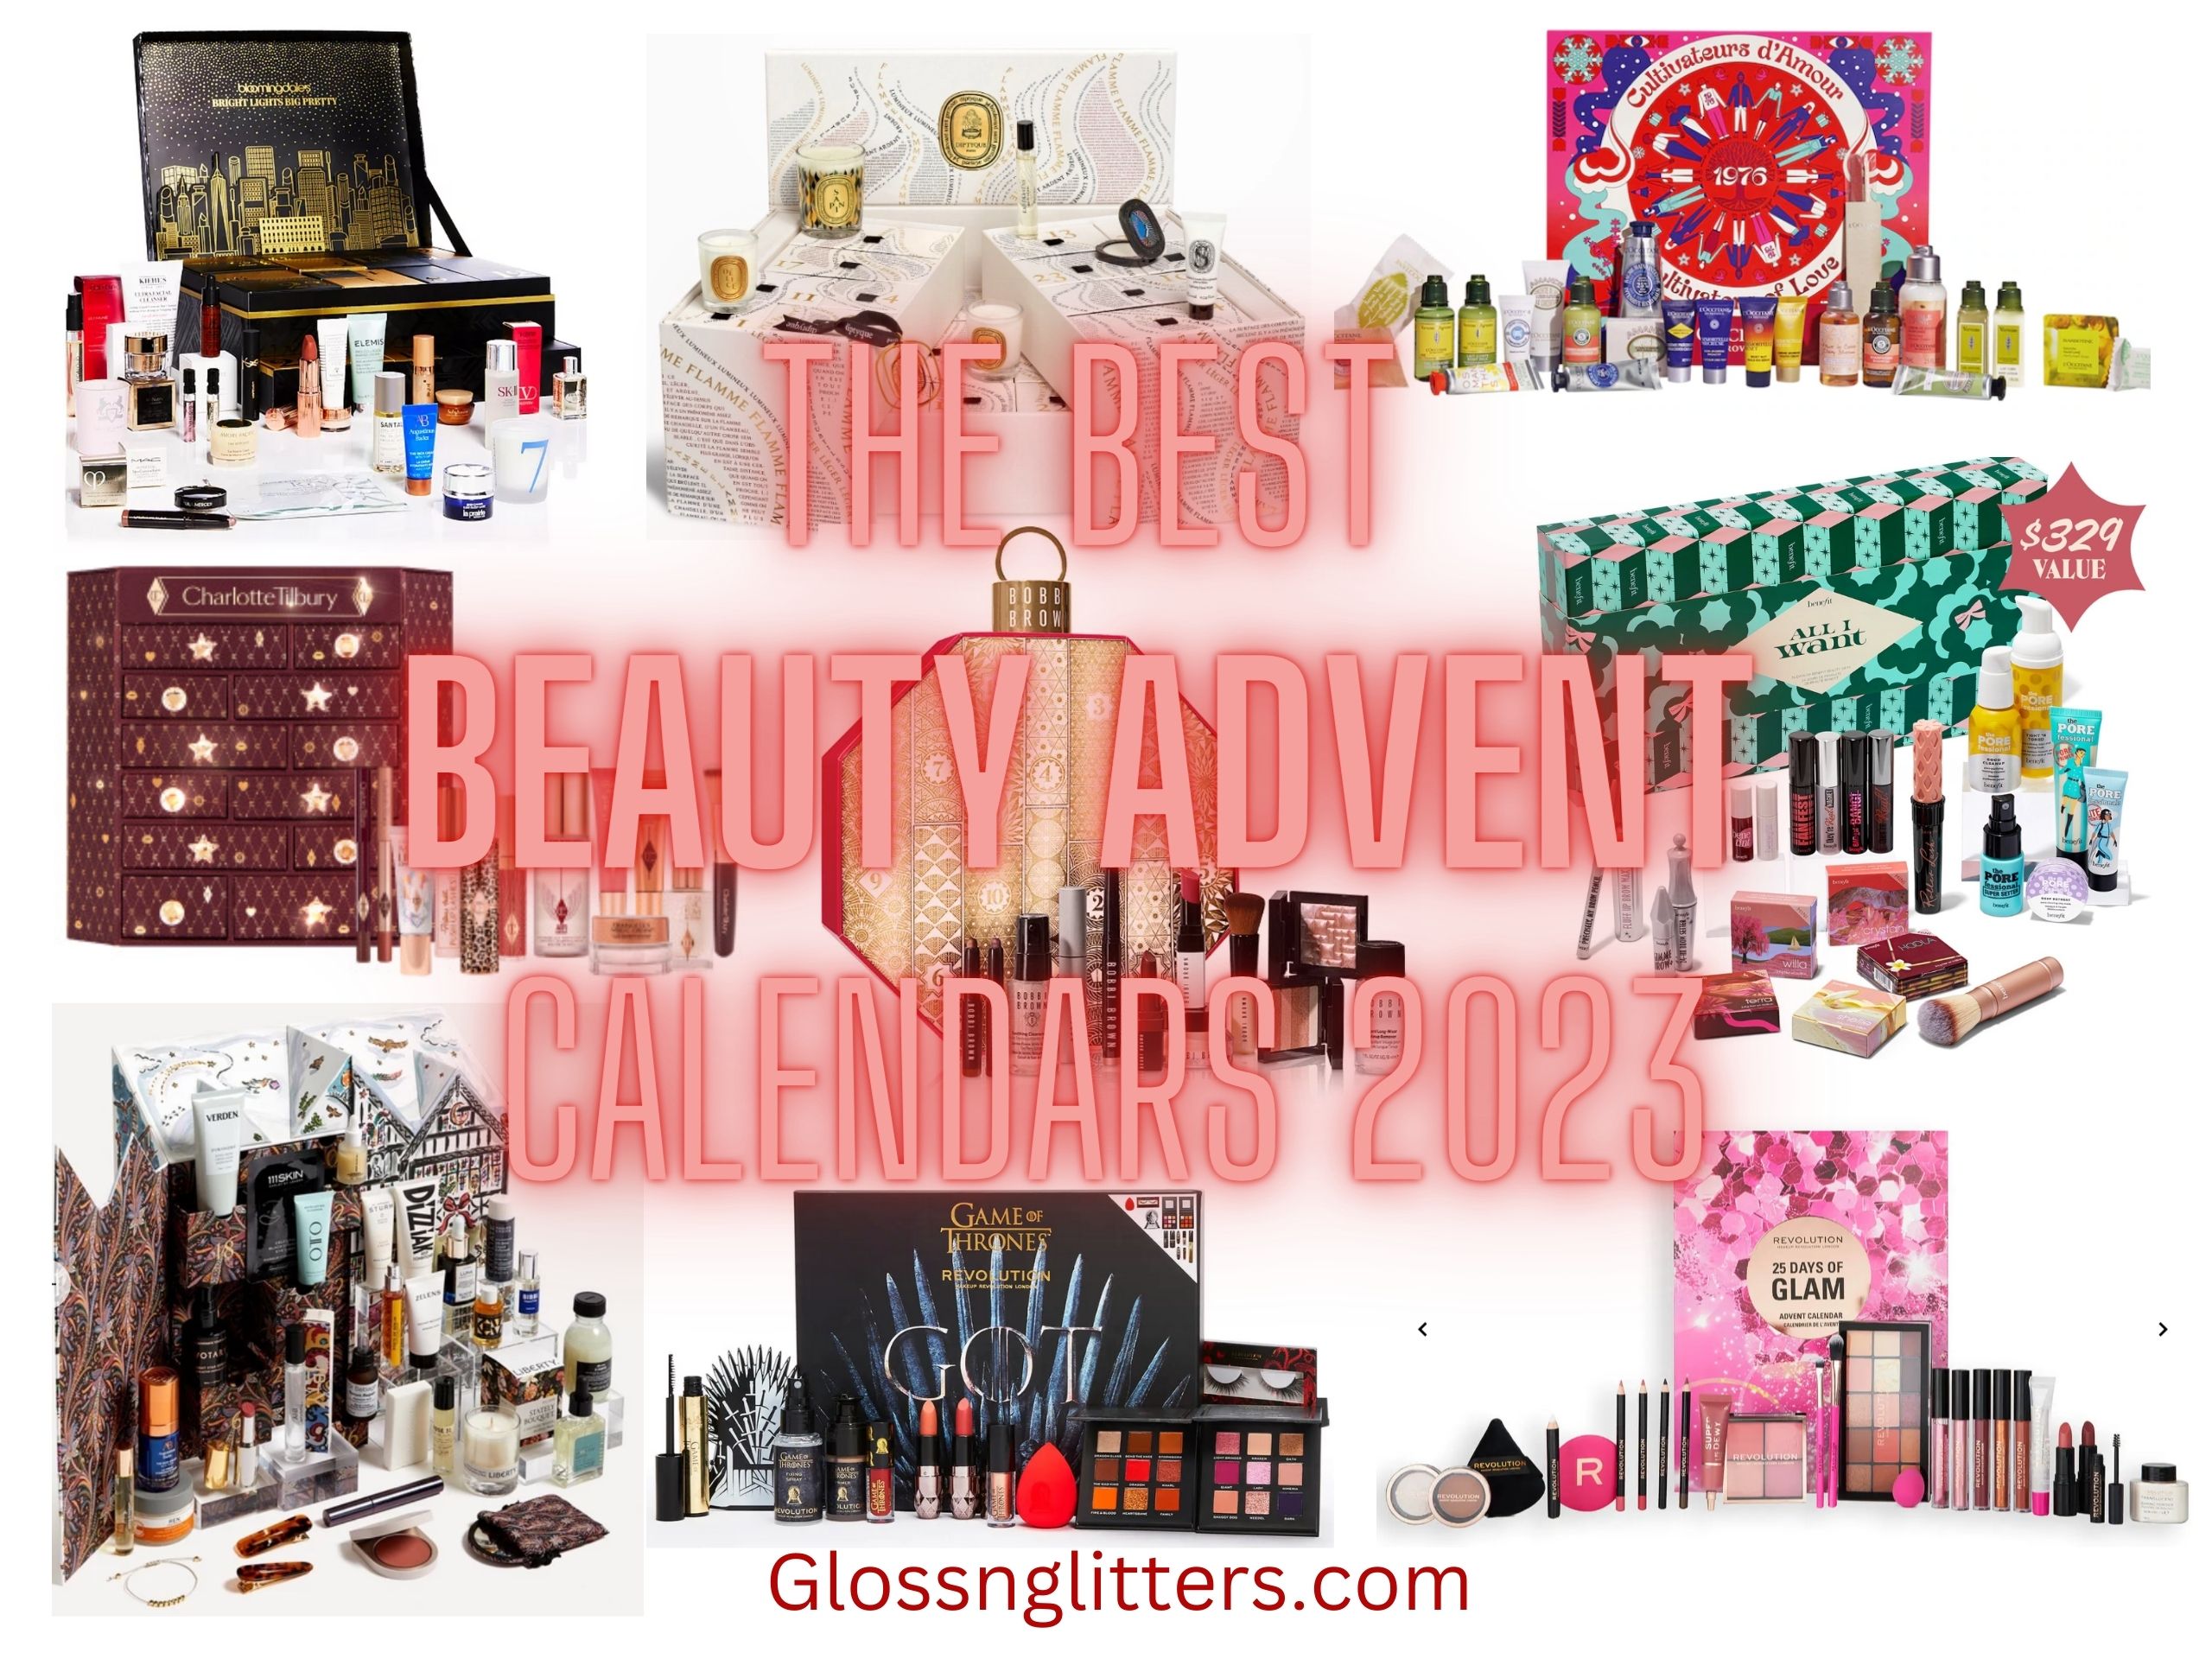 Makeup Revolution 2020 Christmas Advent Calendar - Calendrier de lA